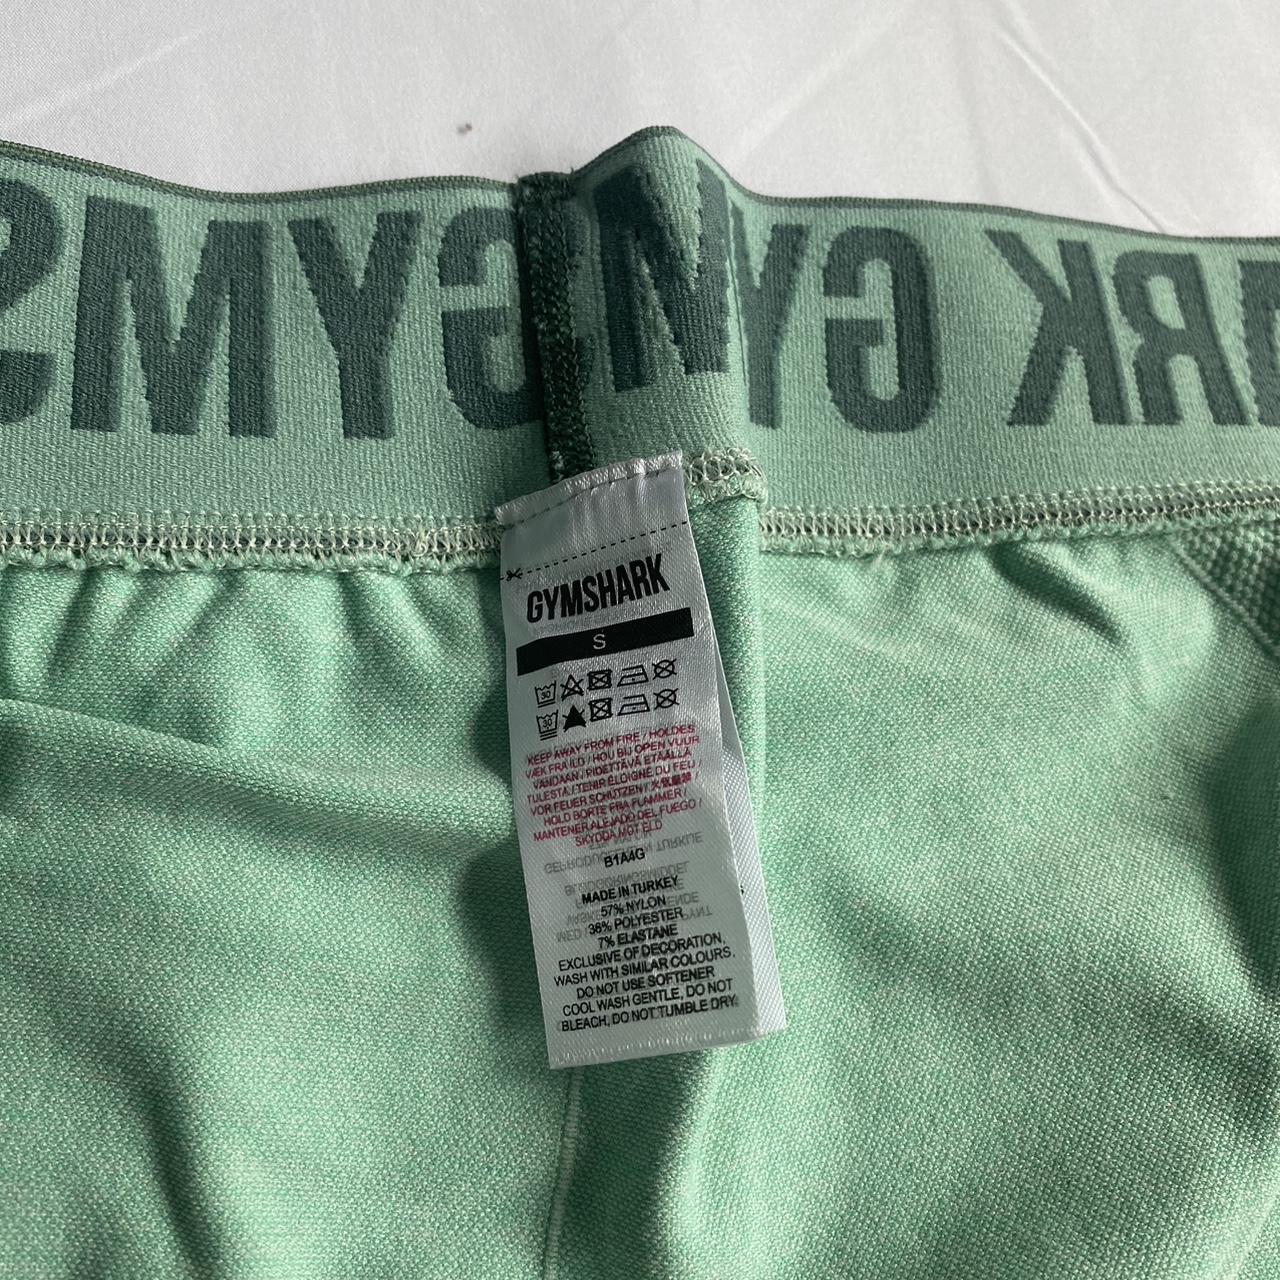 Gymshark Flex Shorts - Cactus Green Marl